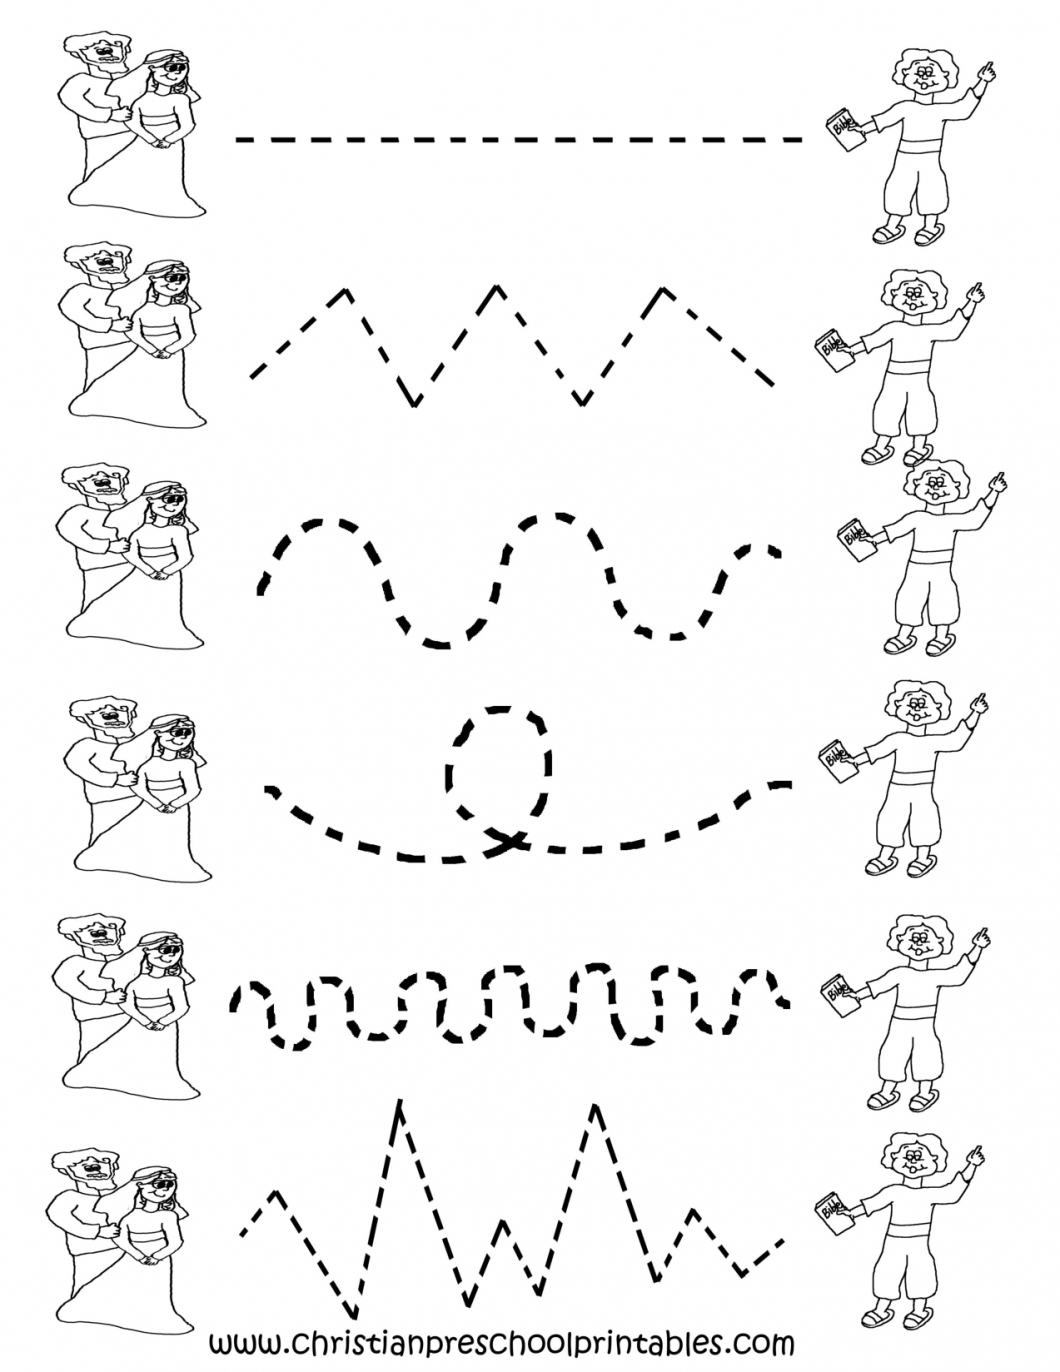 Printable Tracing Worksheets For Preschoolers – With Pre Kinder Free | Free Printable Tracing Worksheets For Preschoolers